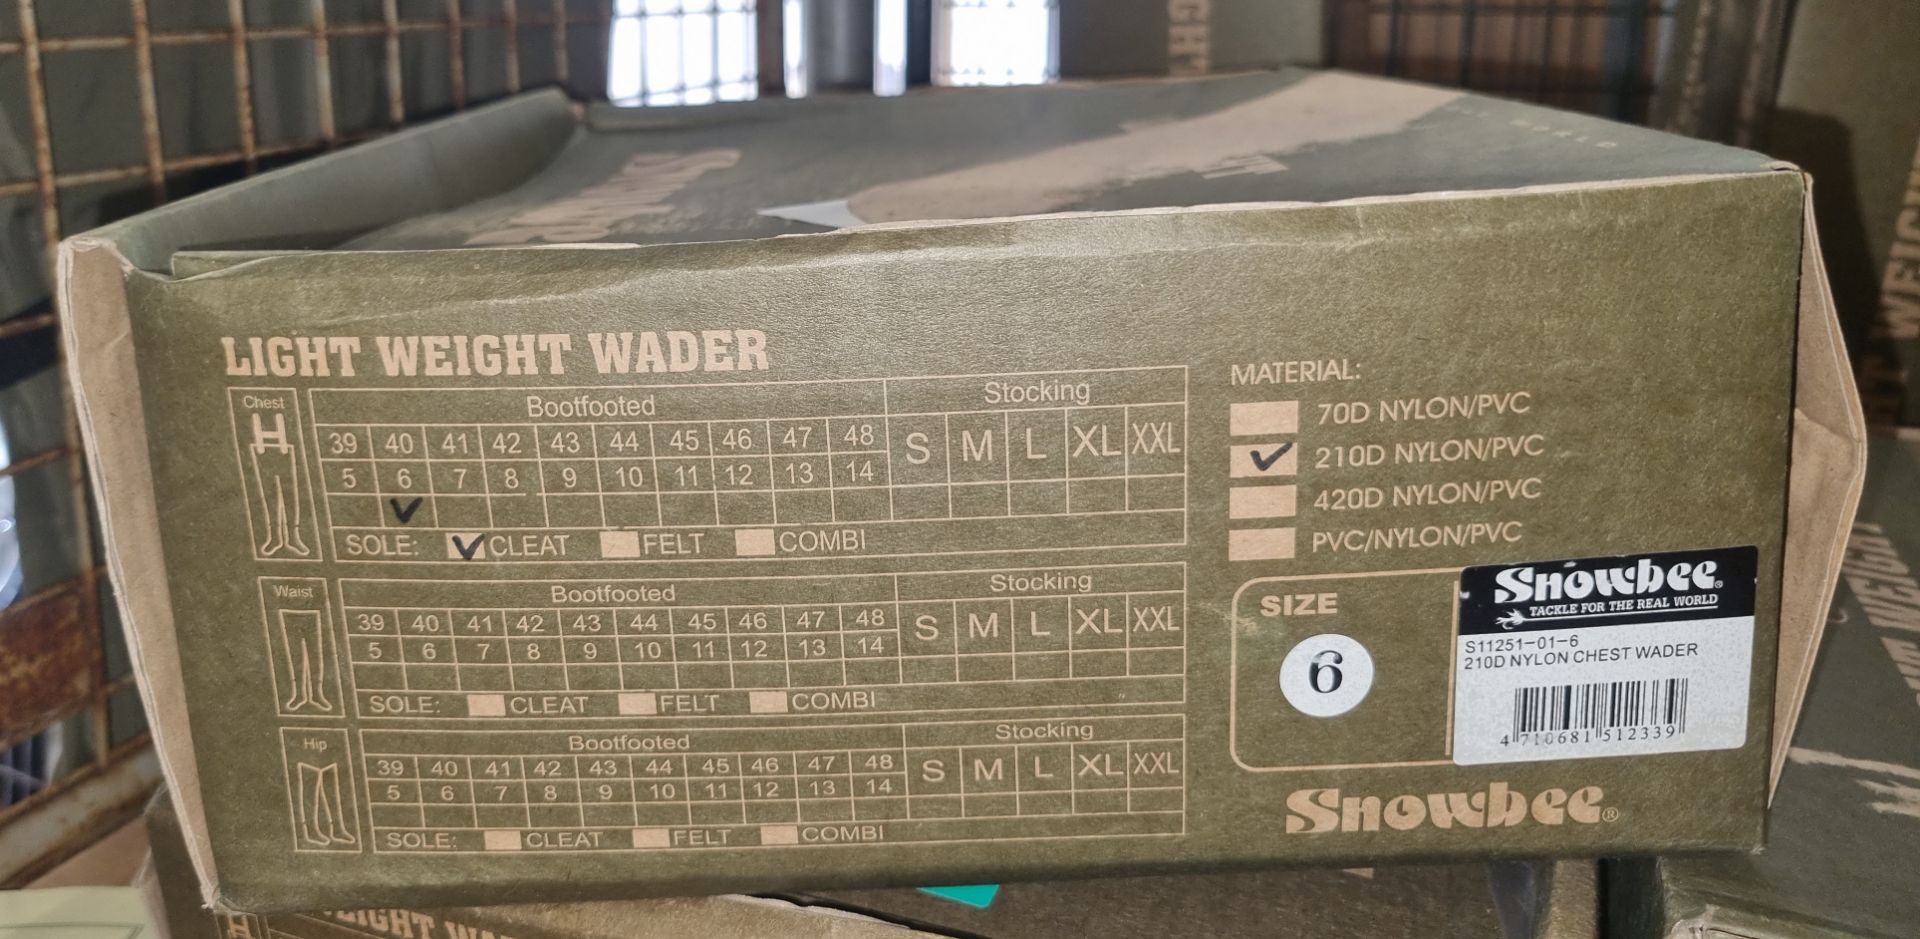 Shobee lightweight wader 210D nylon/pvc - size 6 - Image 3 of 3